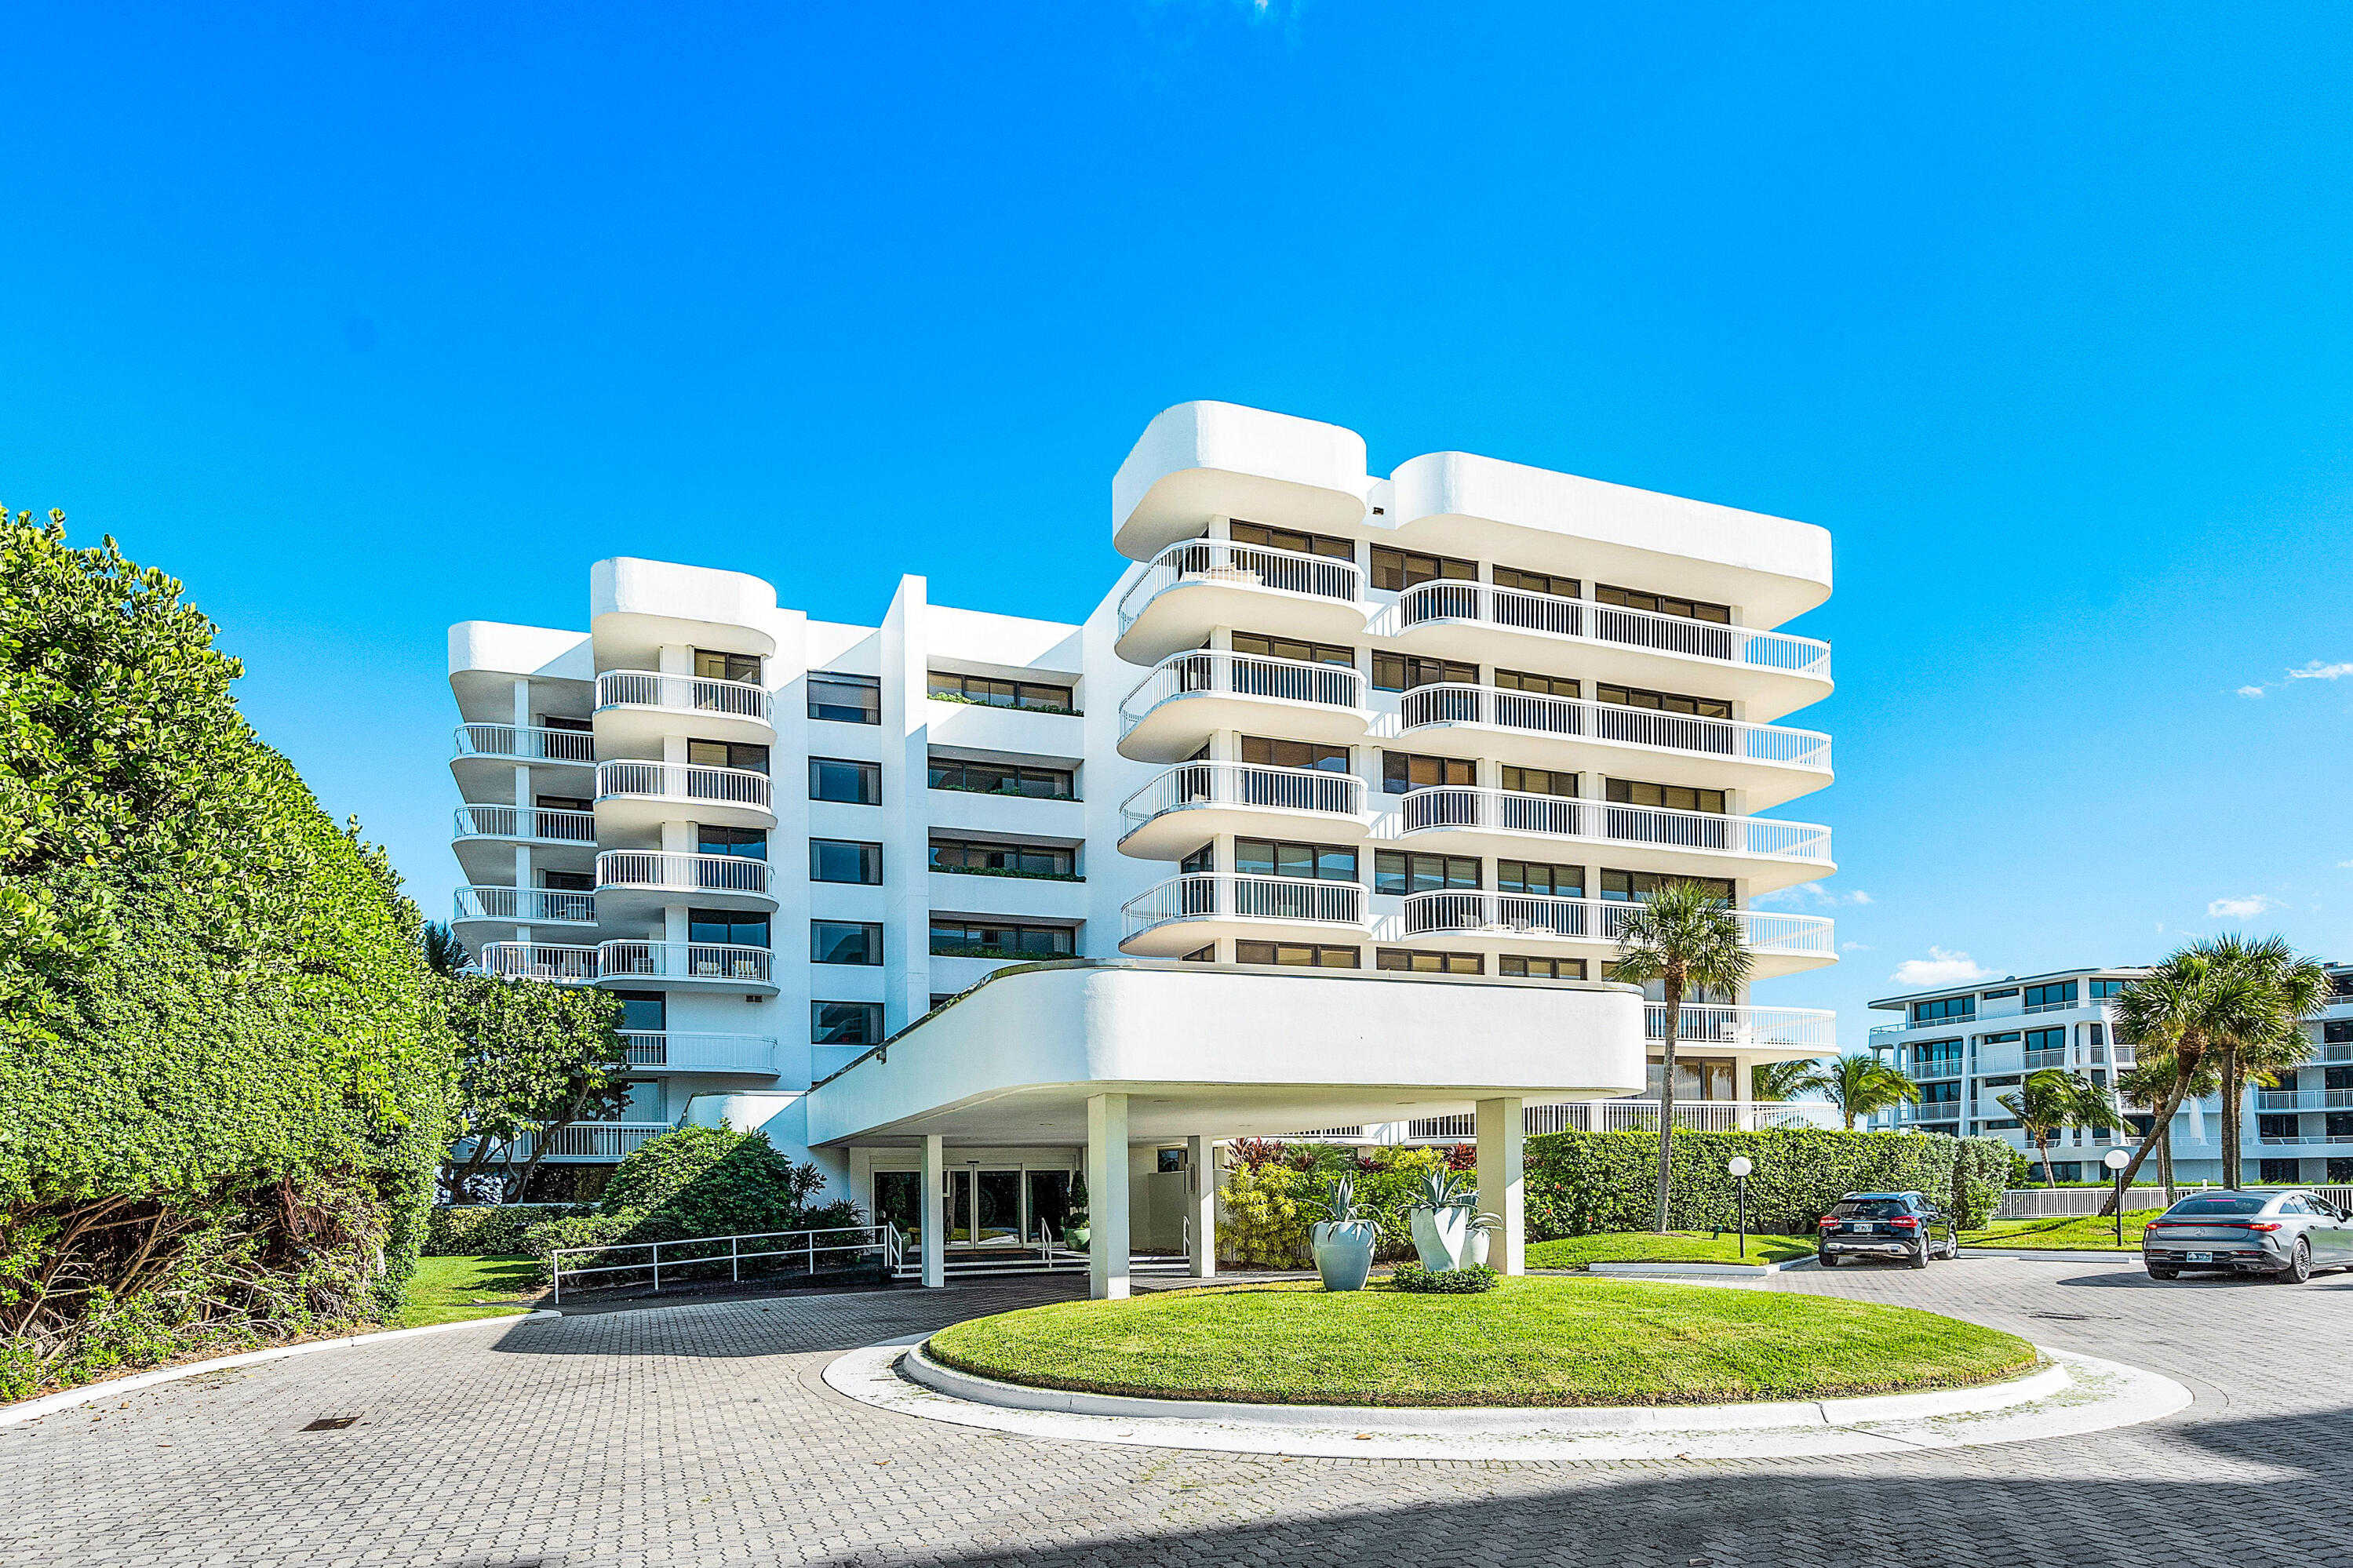 View Palm Beach, FL 33480 residential property